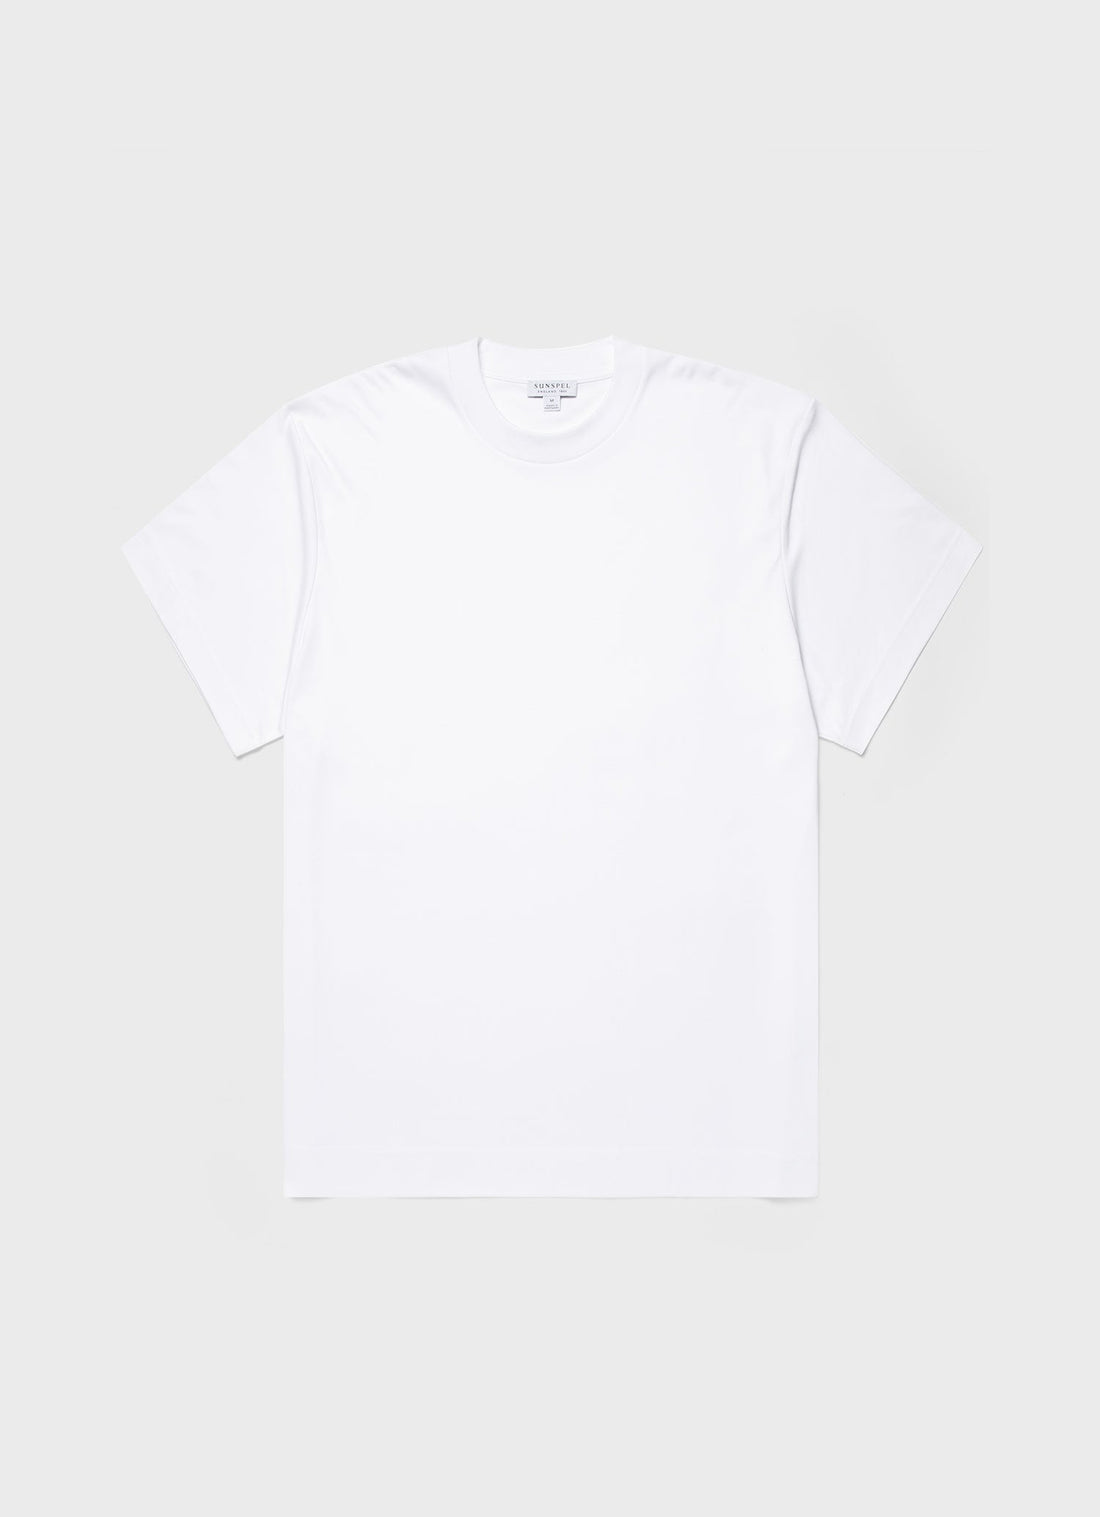 Men's Oversized Heavyweight T-shirt in White